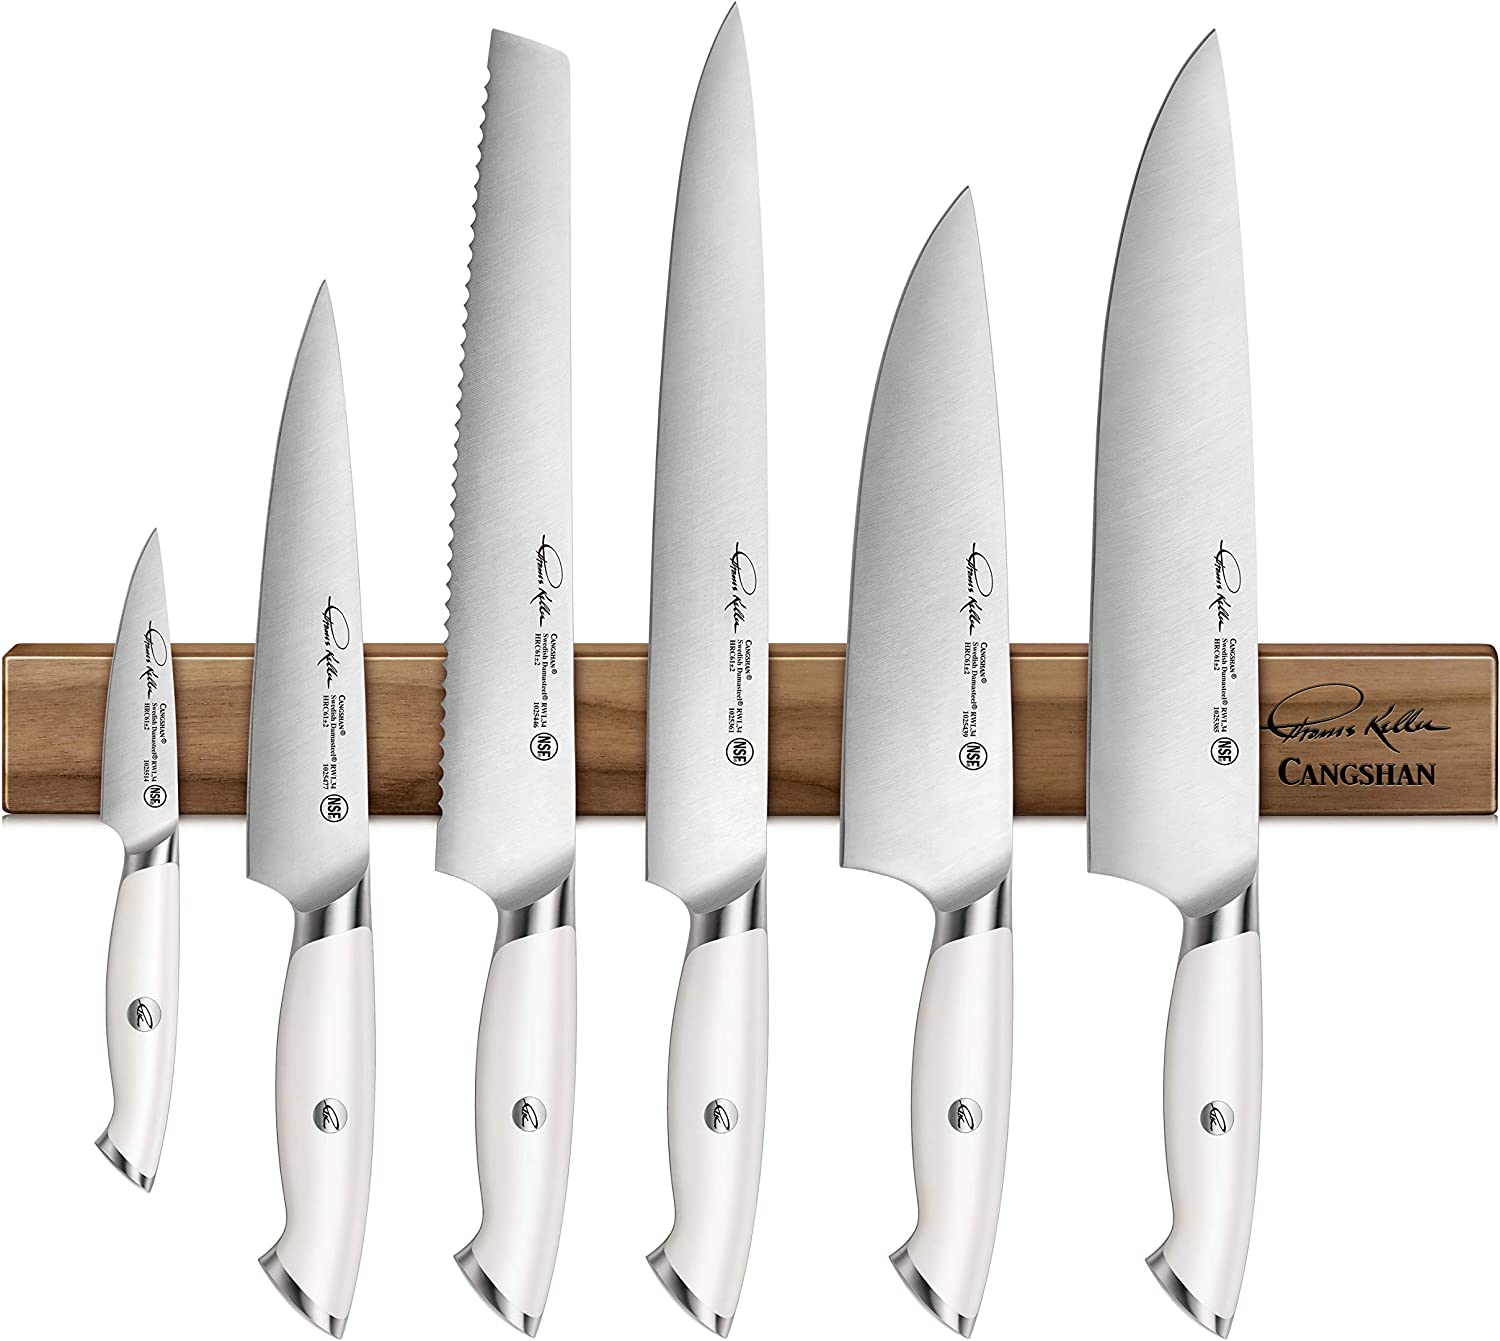 Cangshan Thomas Keller knife set